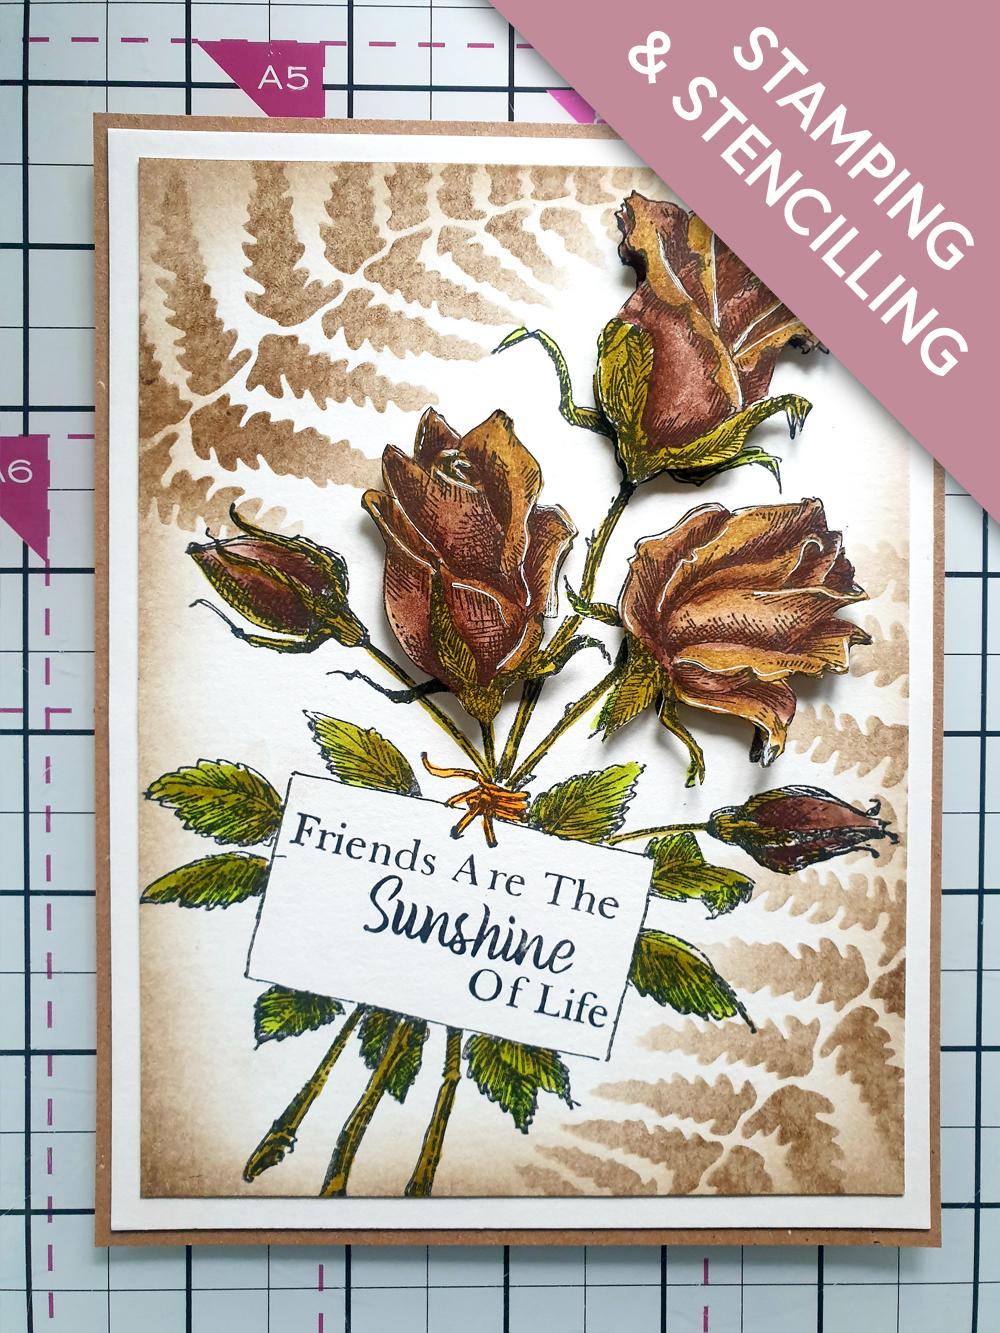 Flower Hugs (card created by Sharon)